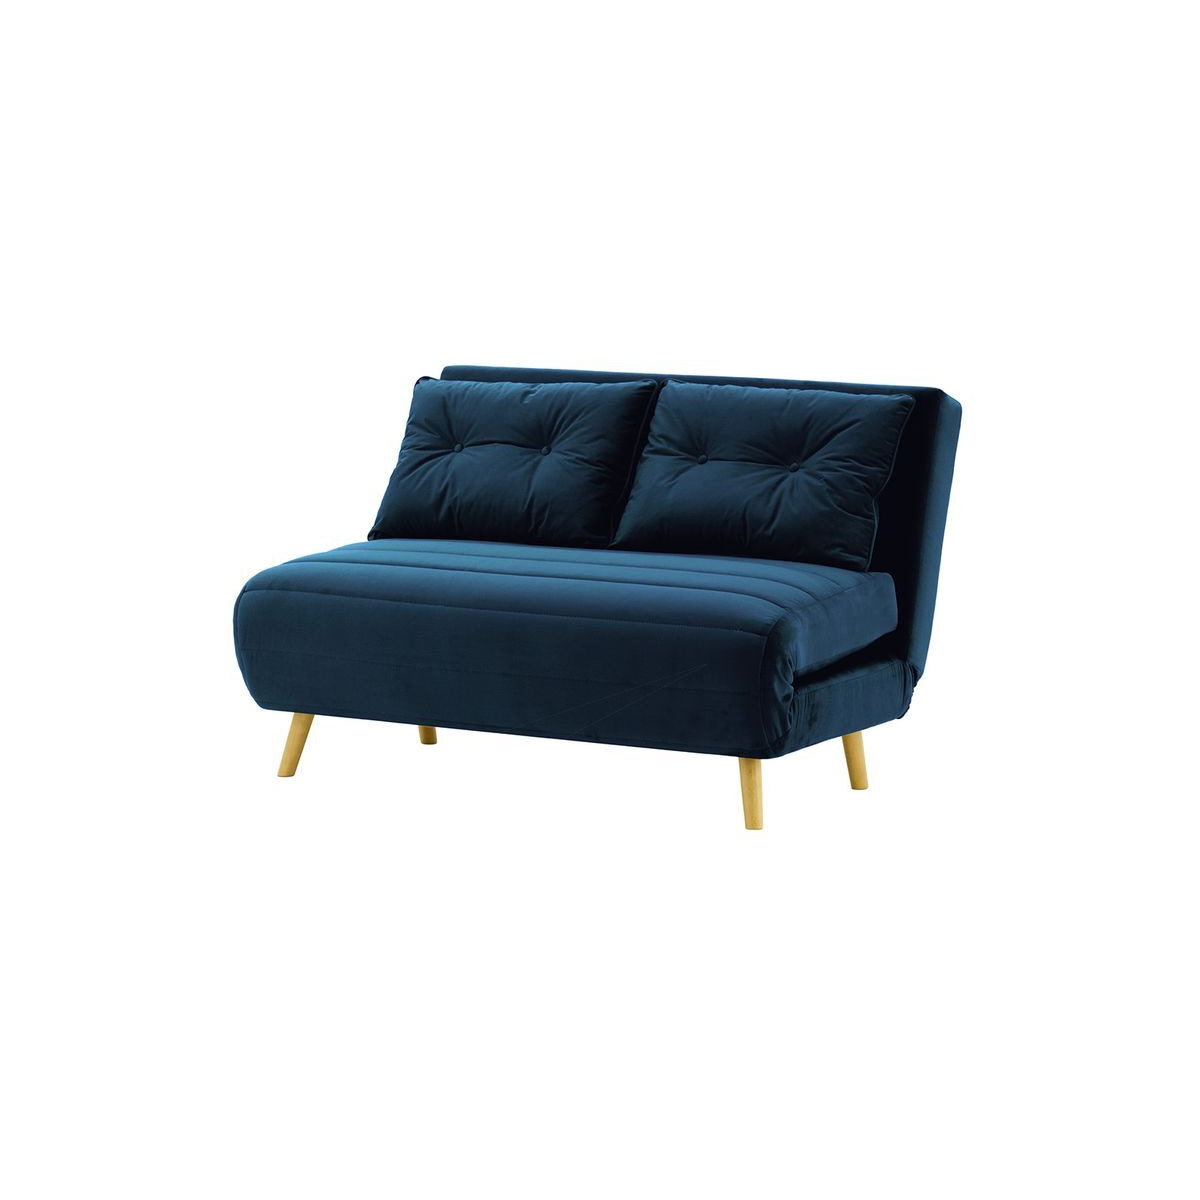 Flic Double Sofa Bed - width 120 cm, brown, Leg colour: aveo - image 1